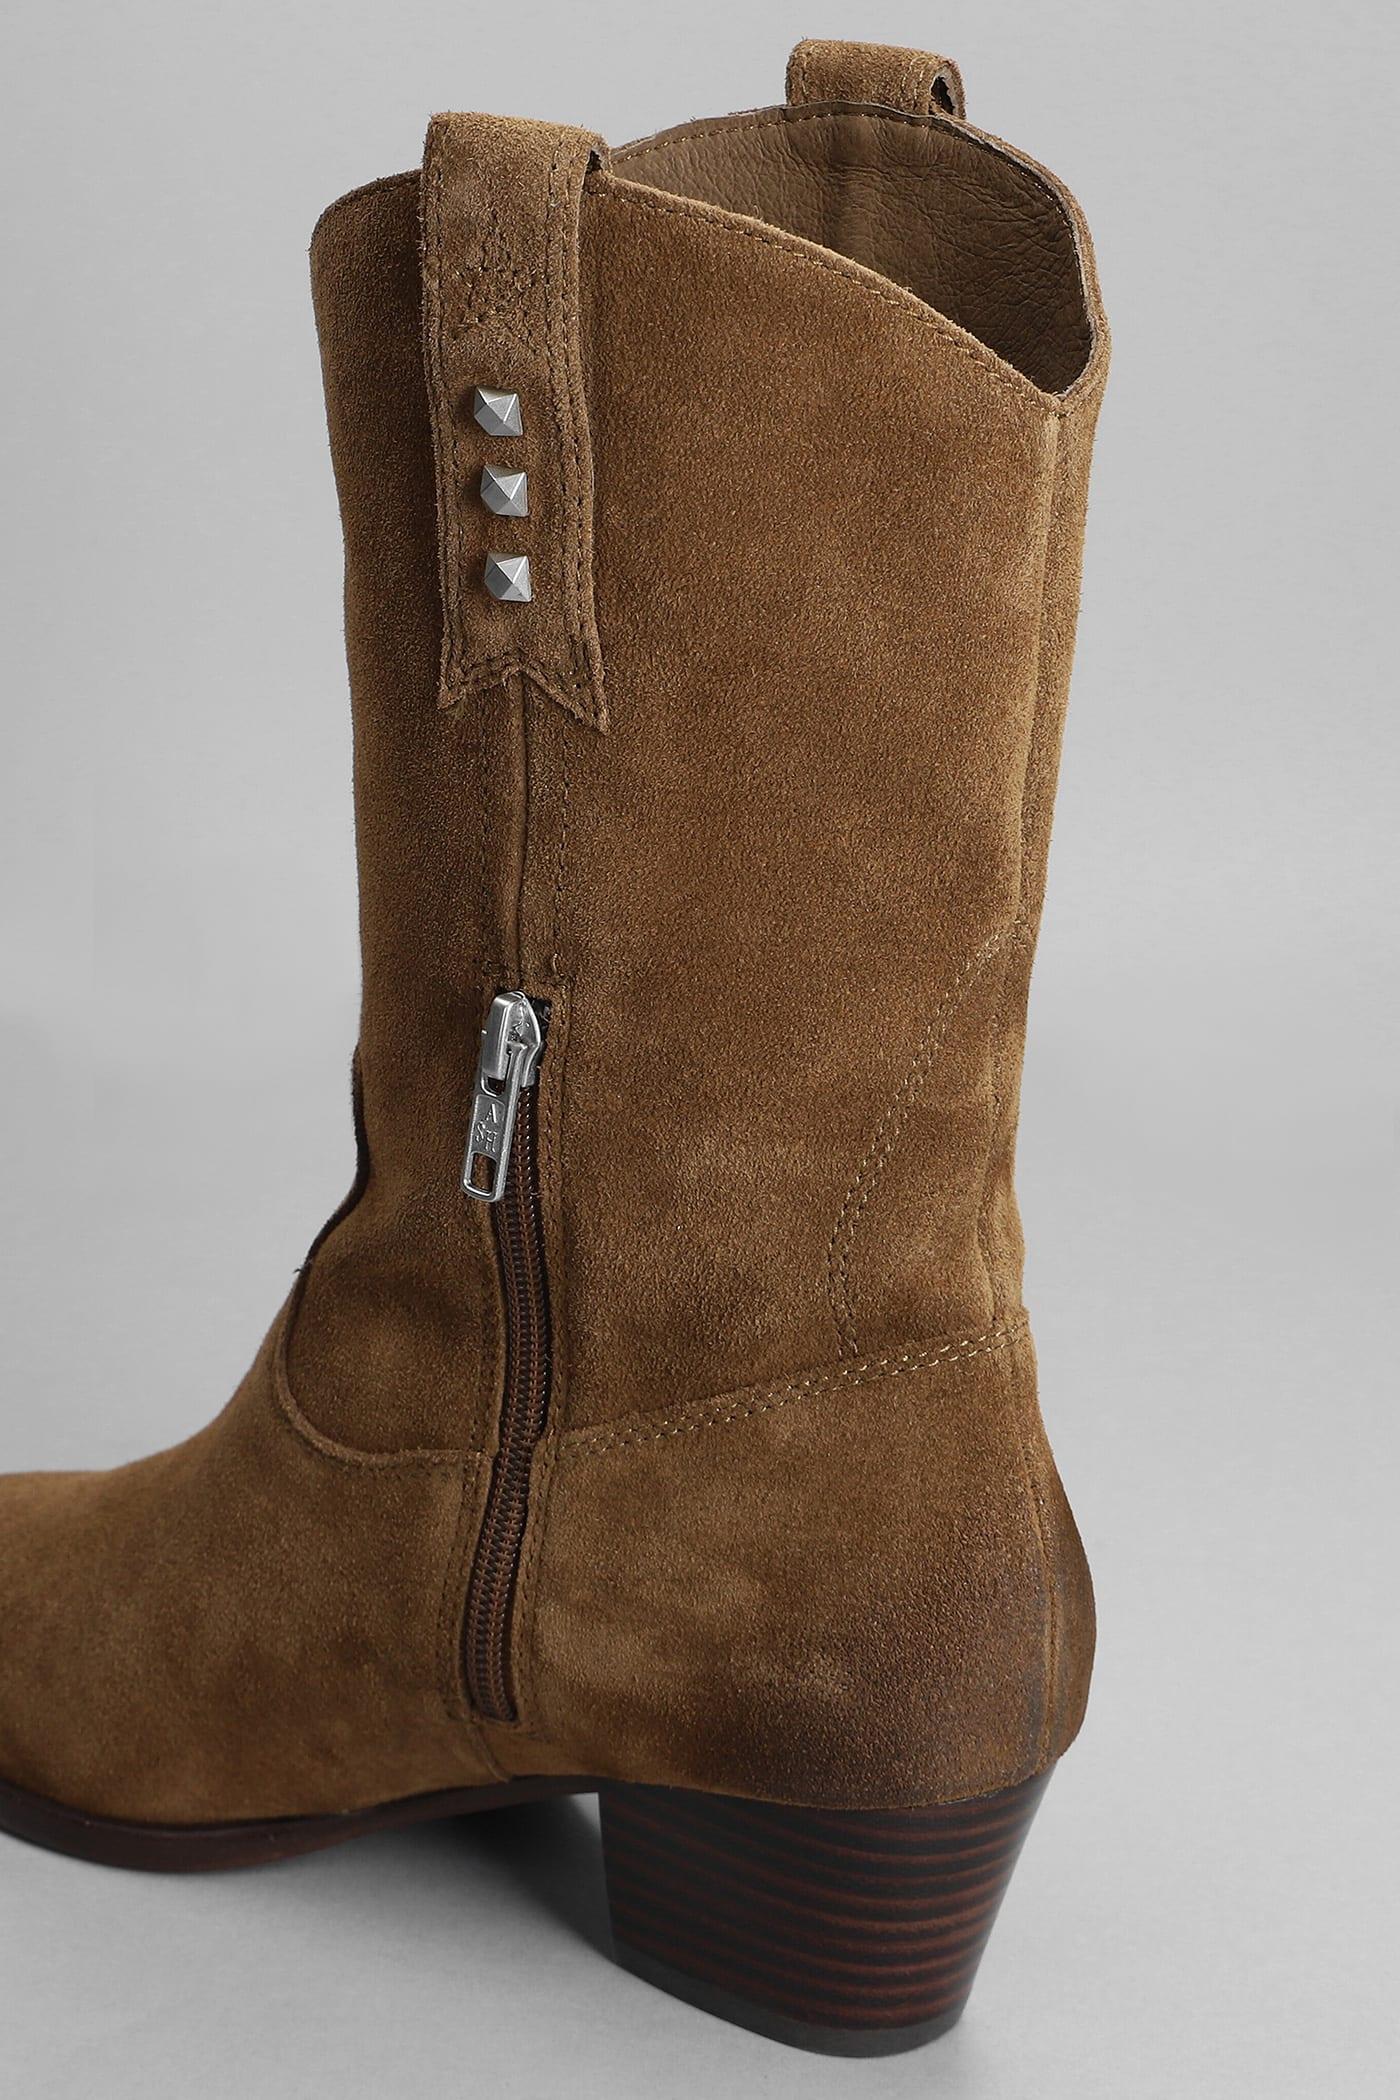 Ash Hooper Texan Boots In Brown Suede | Lyst